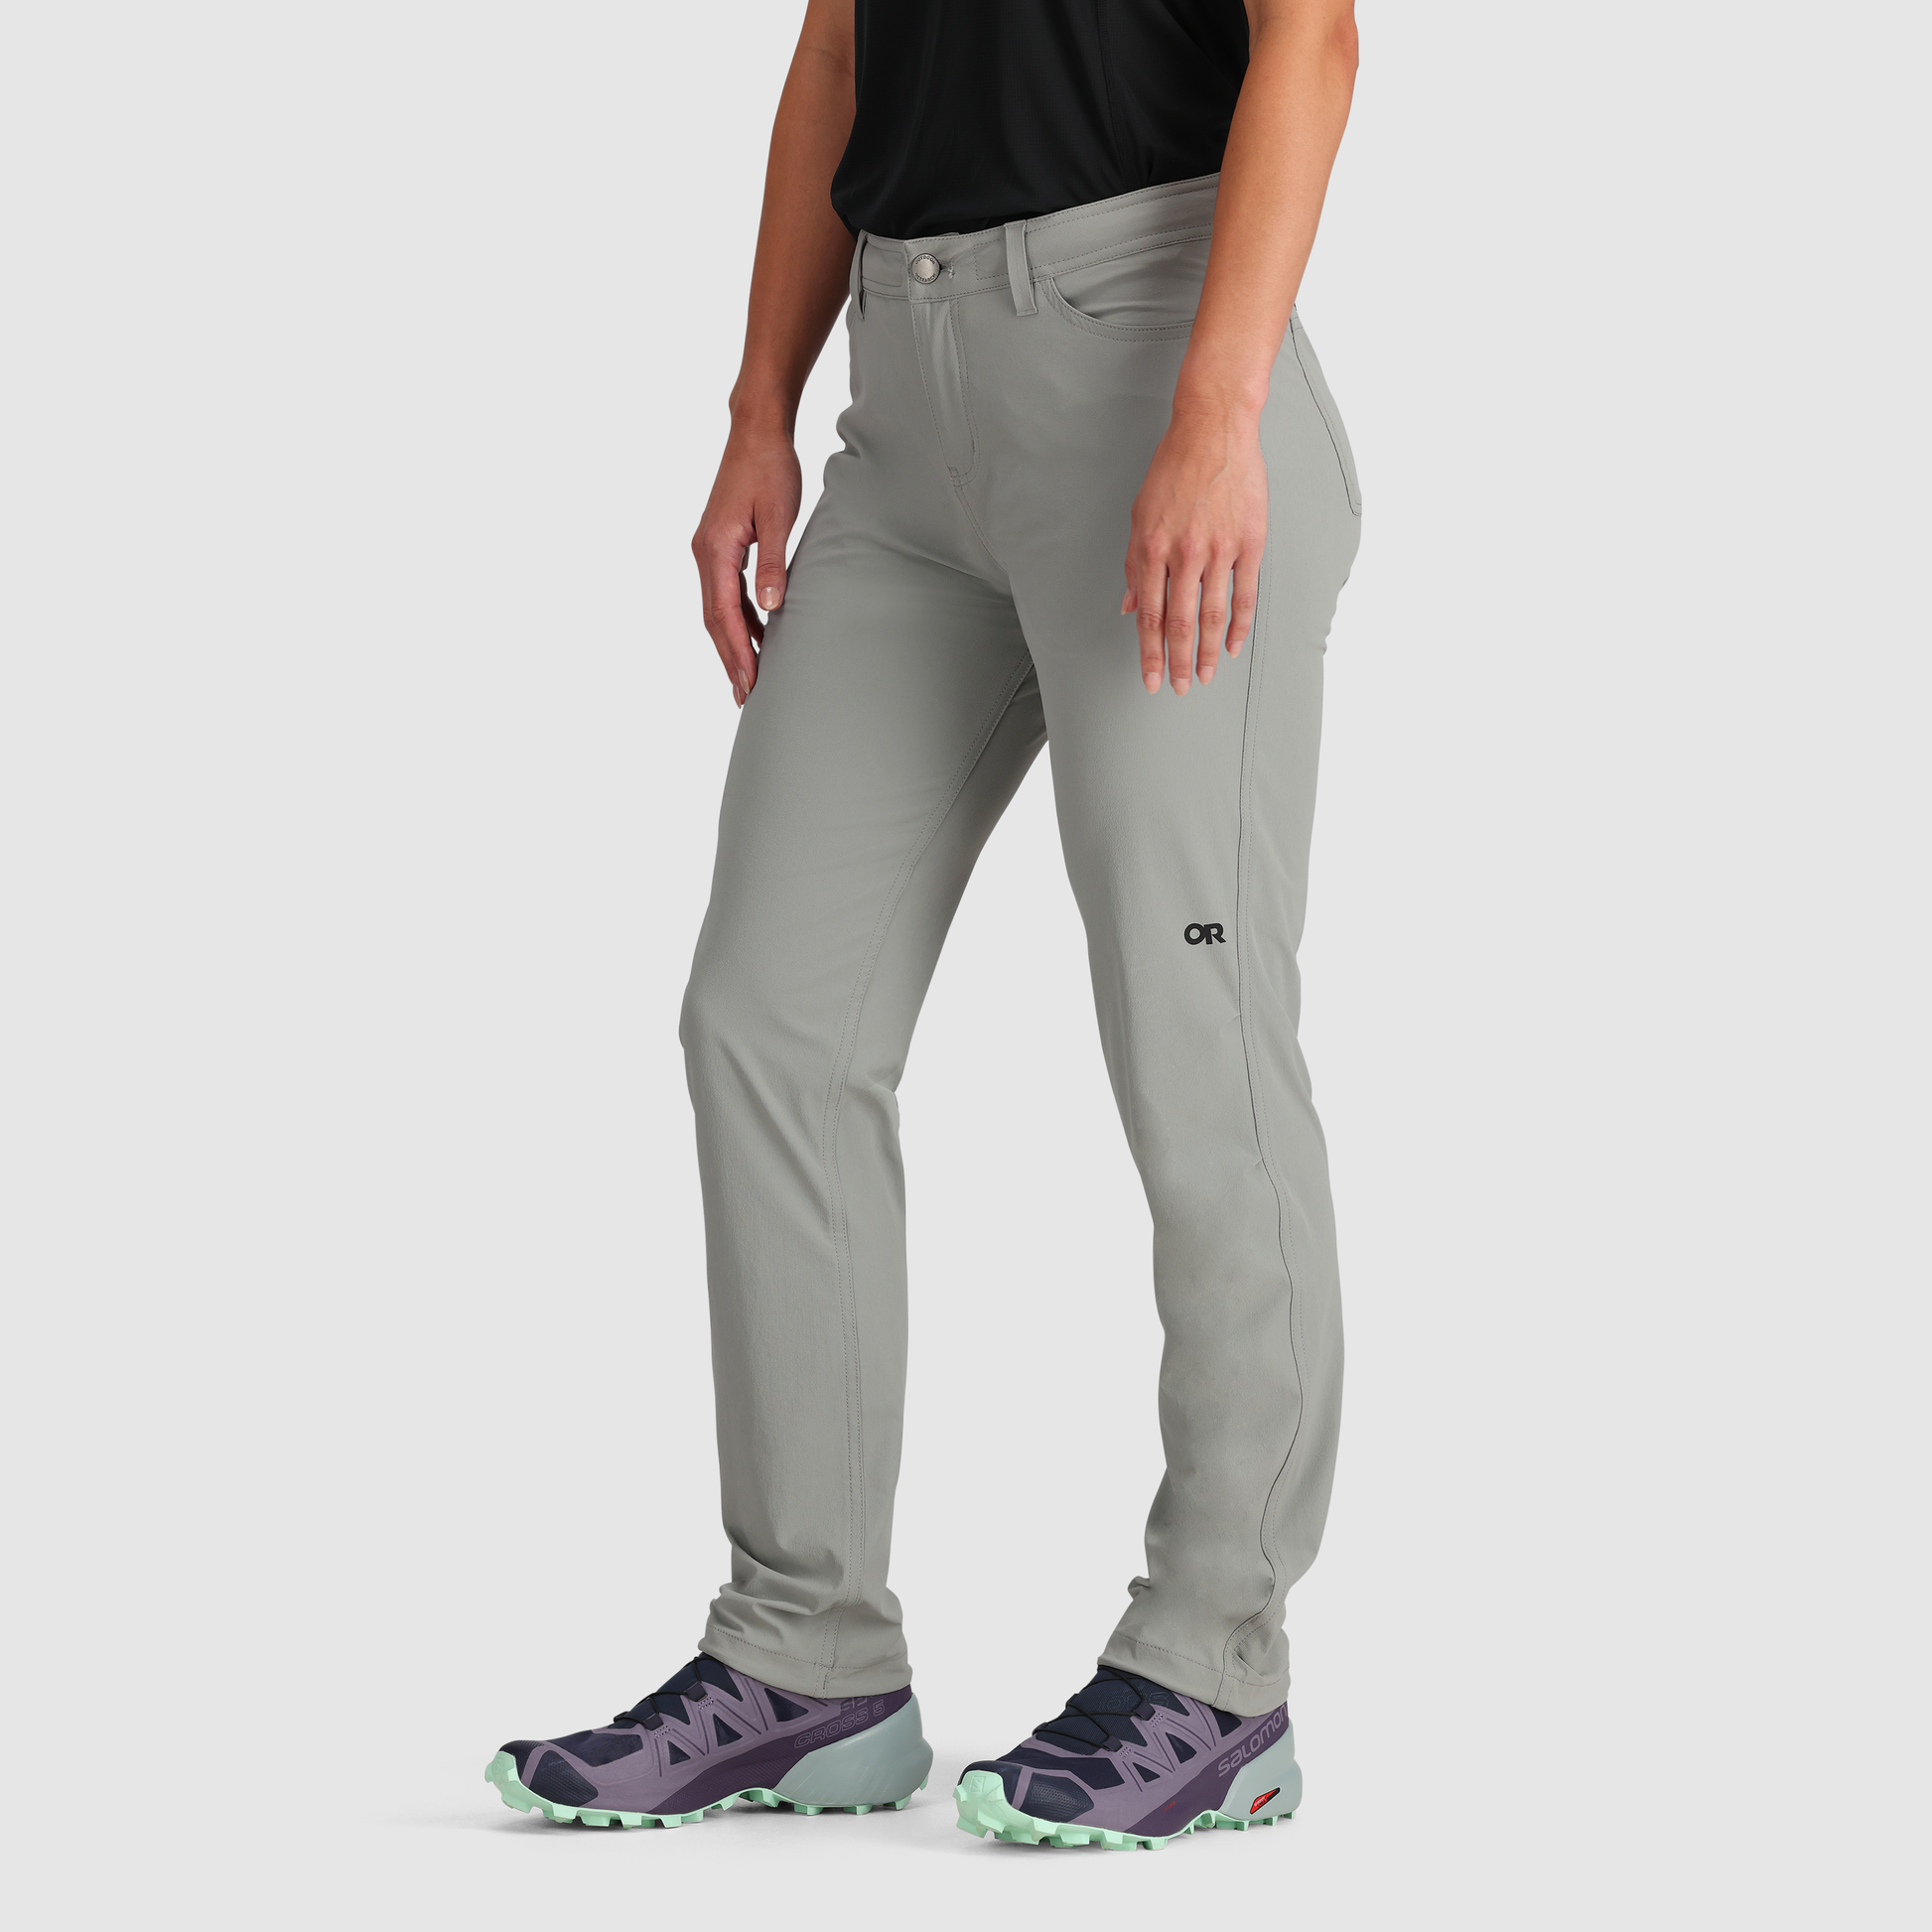 Woman Within Gray Womens Size 18/20W Pants – Twice As Nice